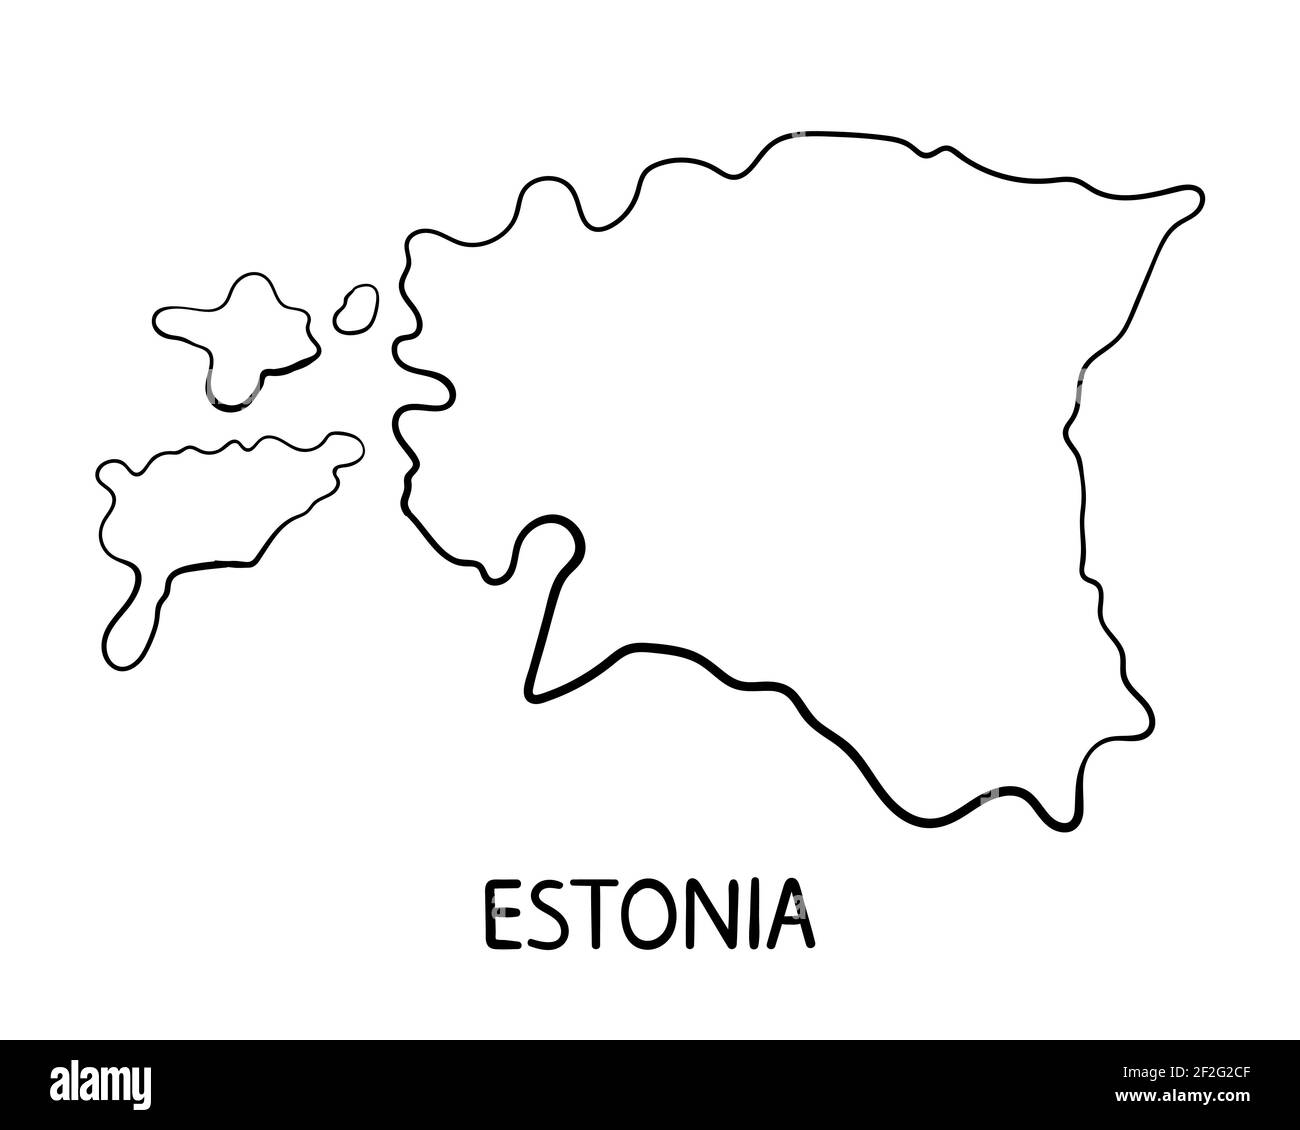 Estonia Map - Hand Drawn Illustration Stock Photo